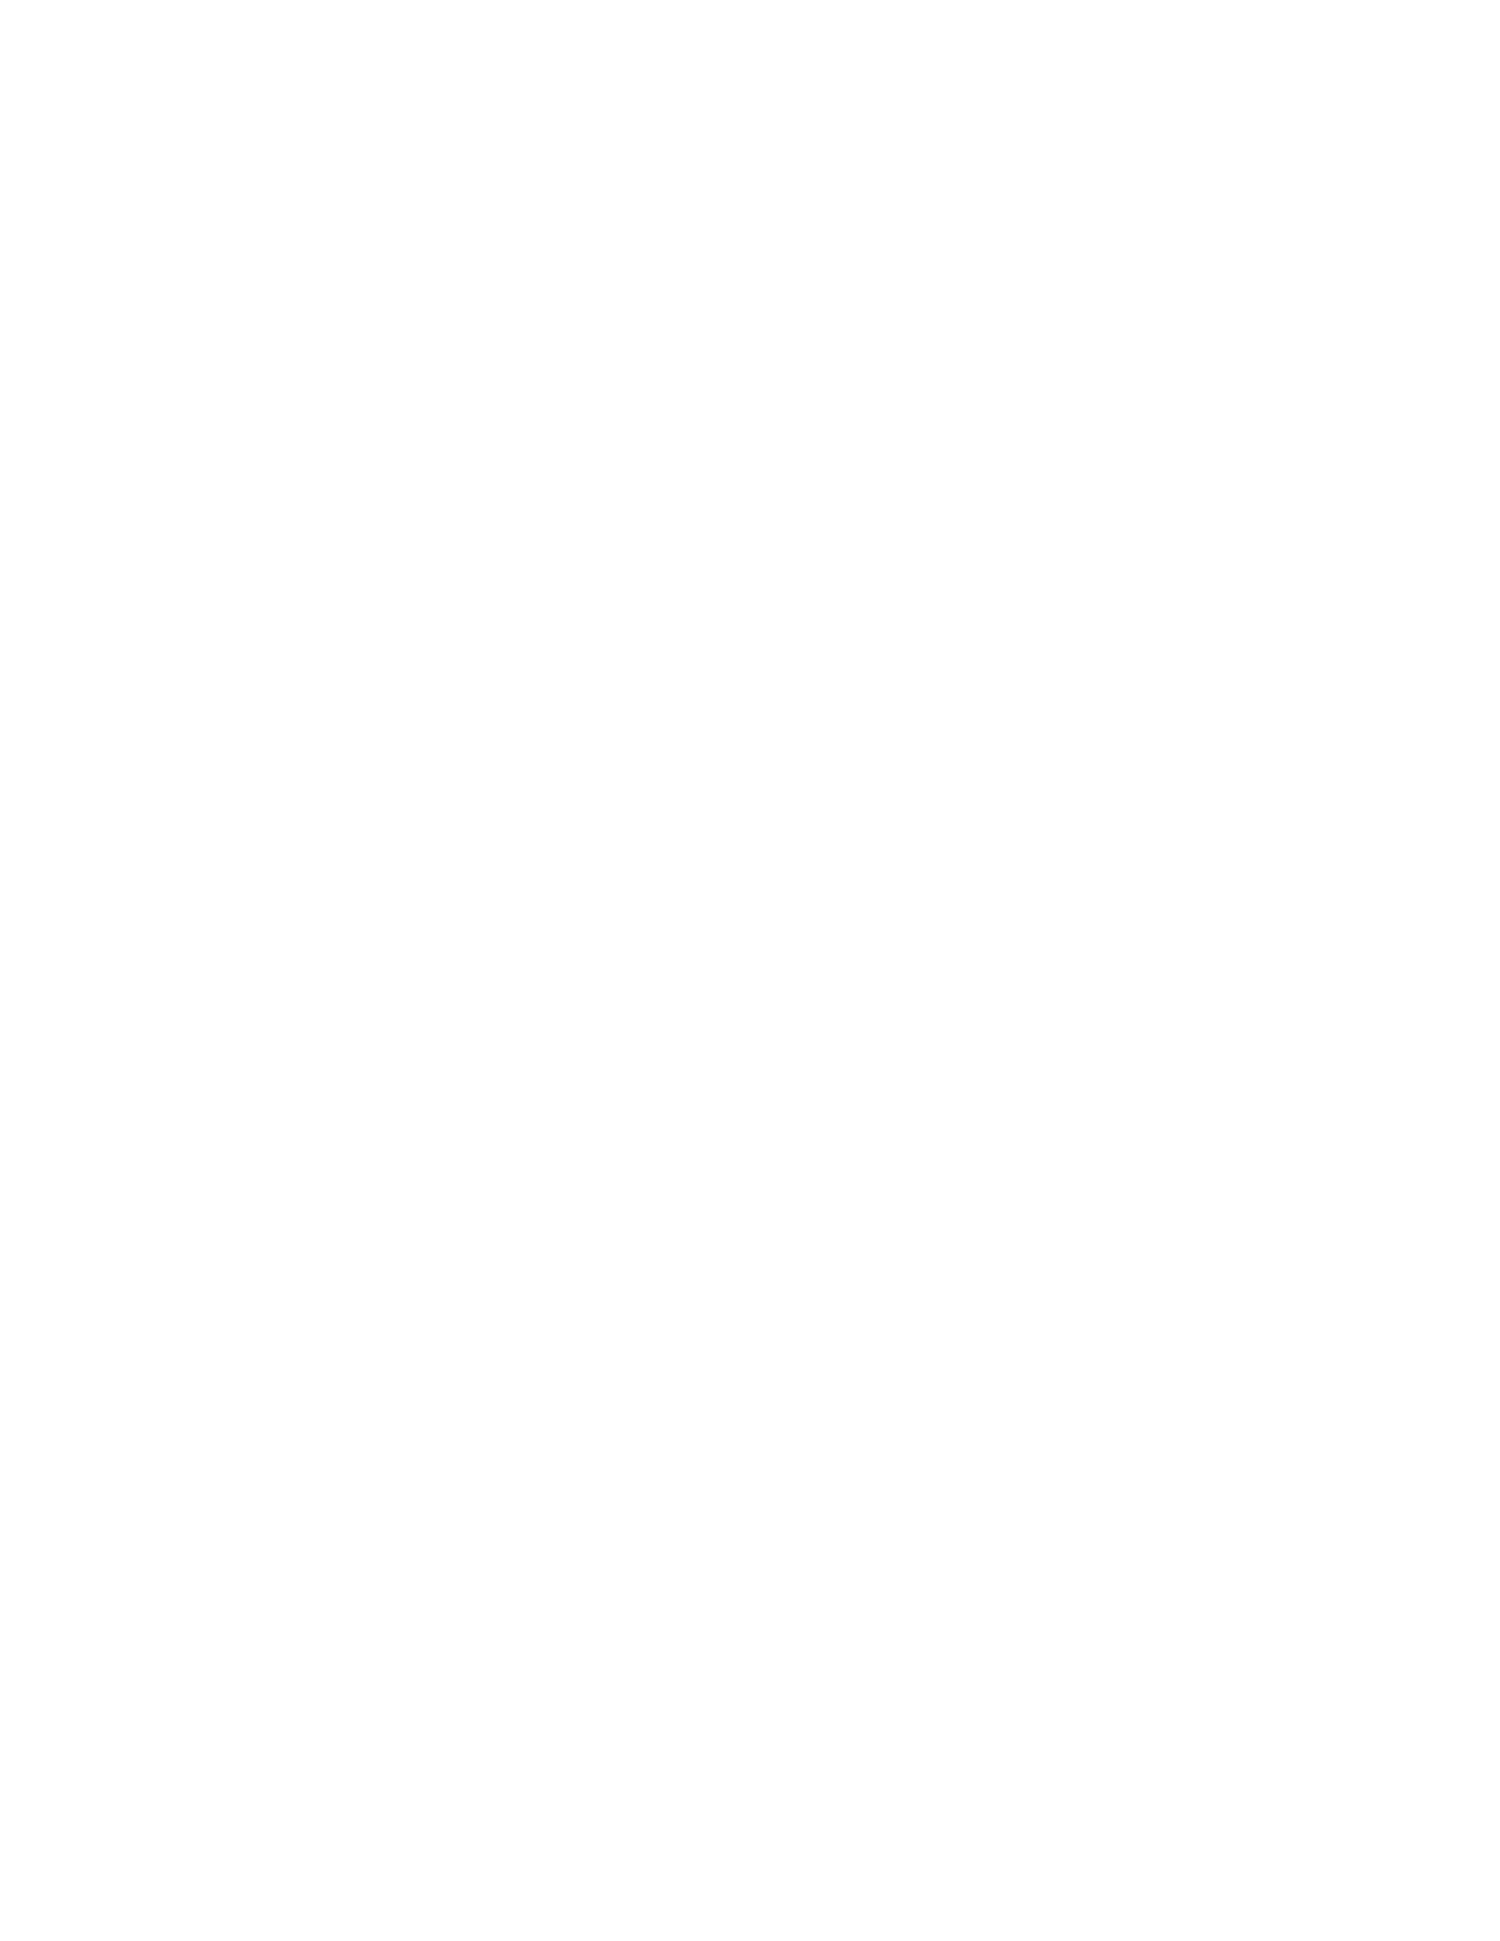 Garden Grove Community Foundation